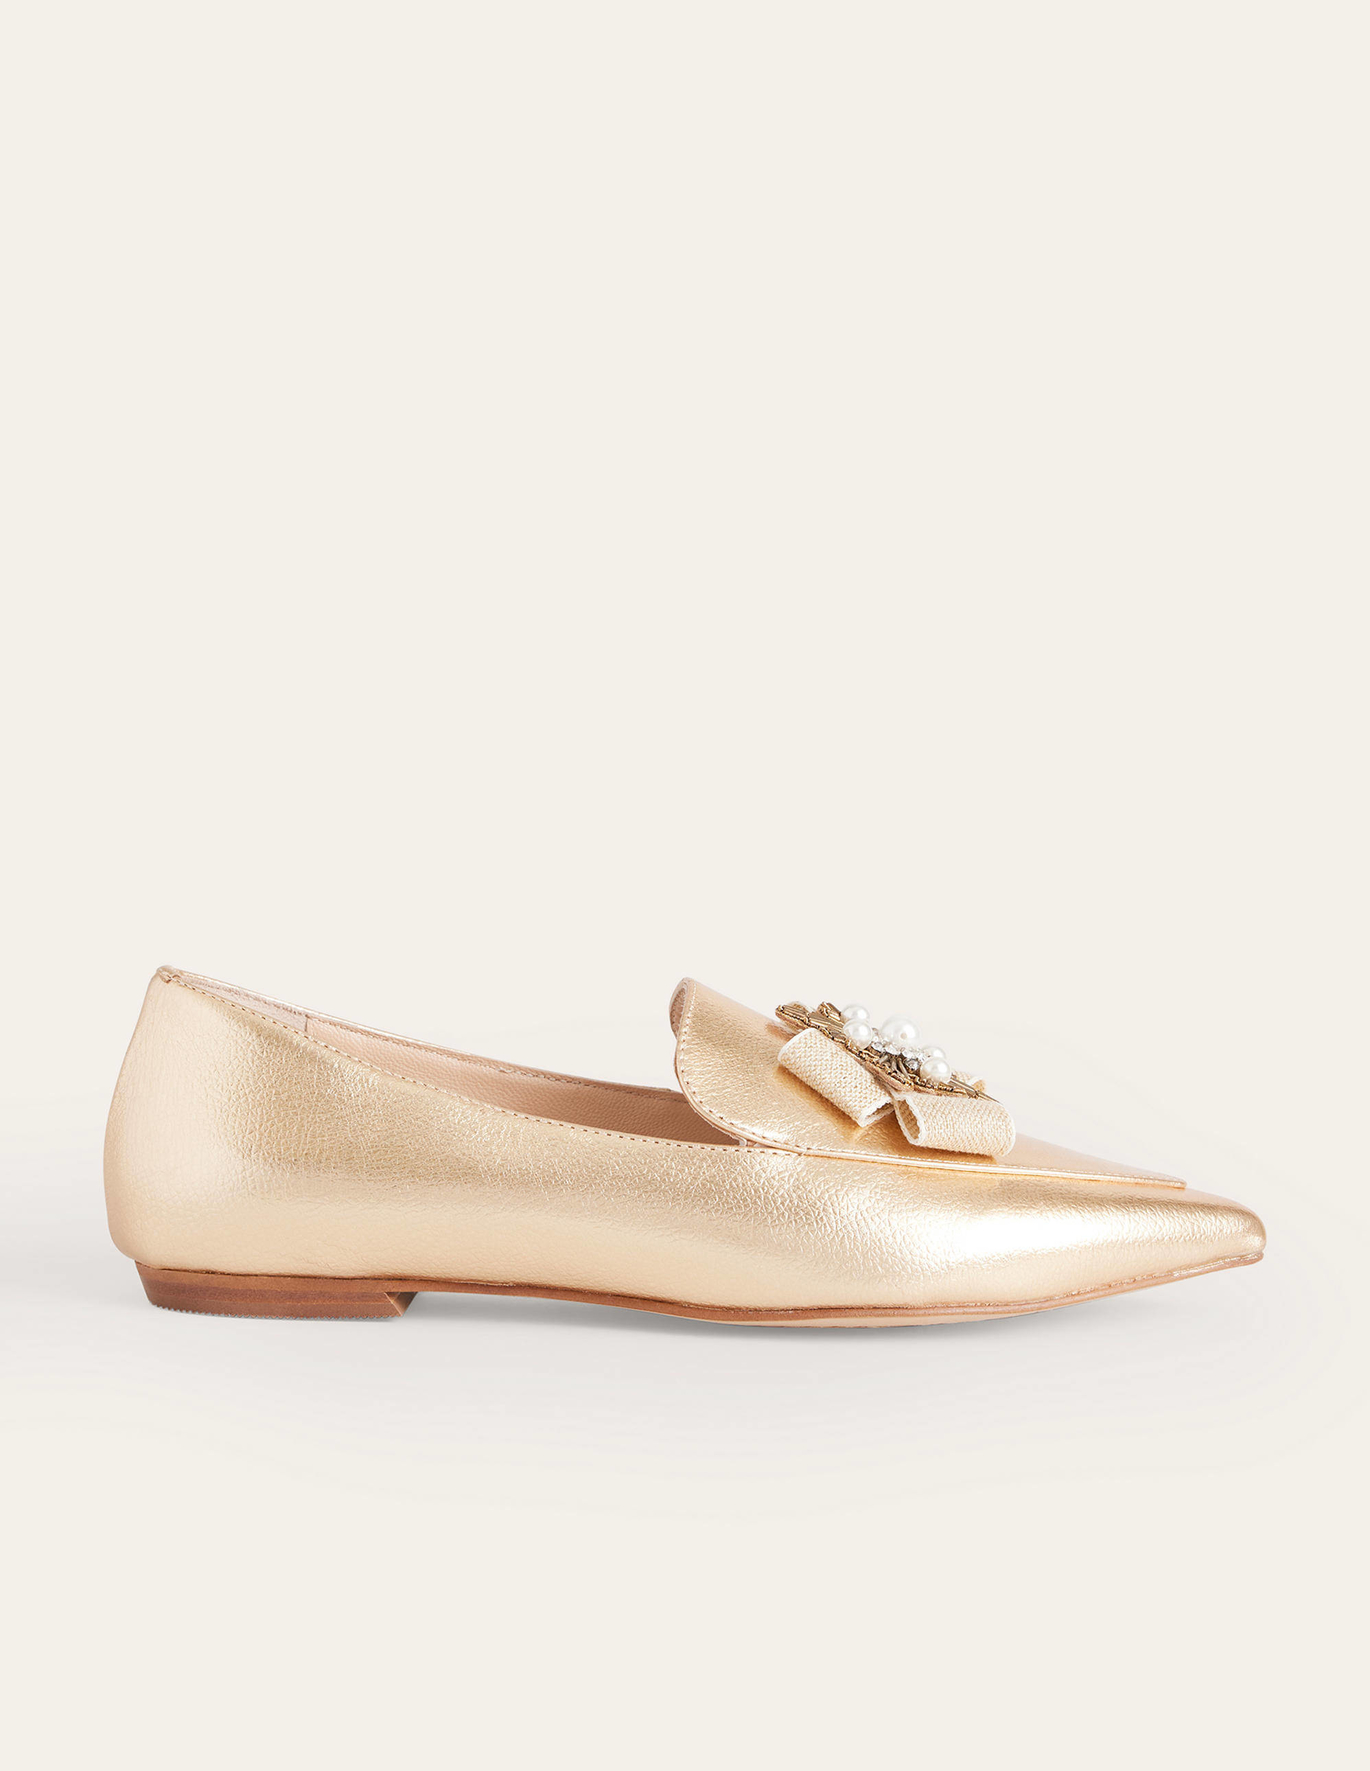 Boden Embellished Pointed Loafers - Gold